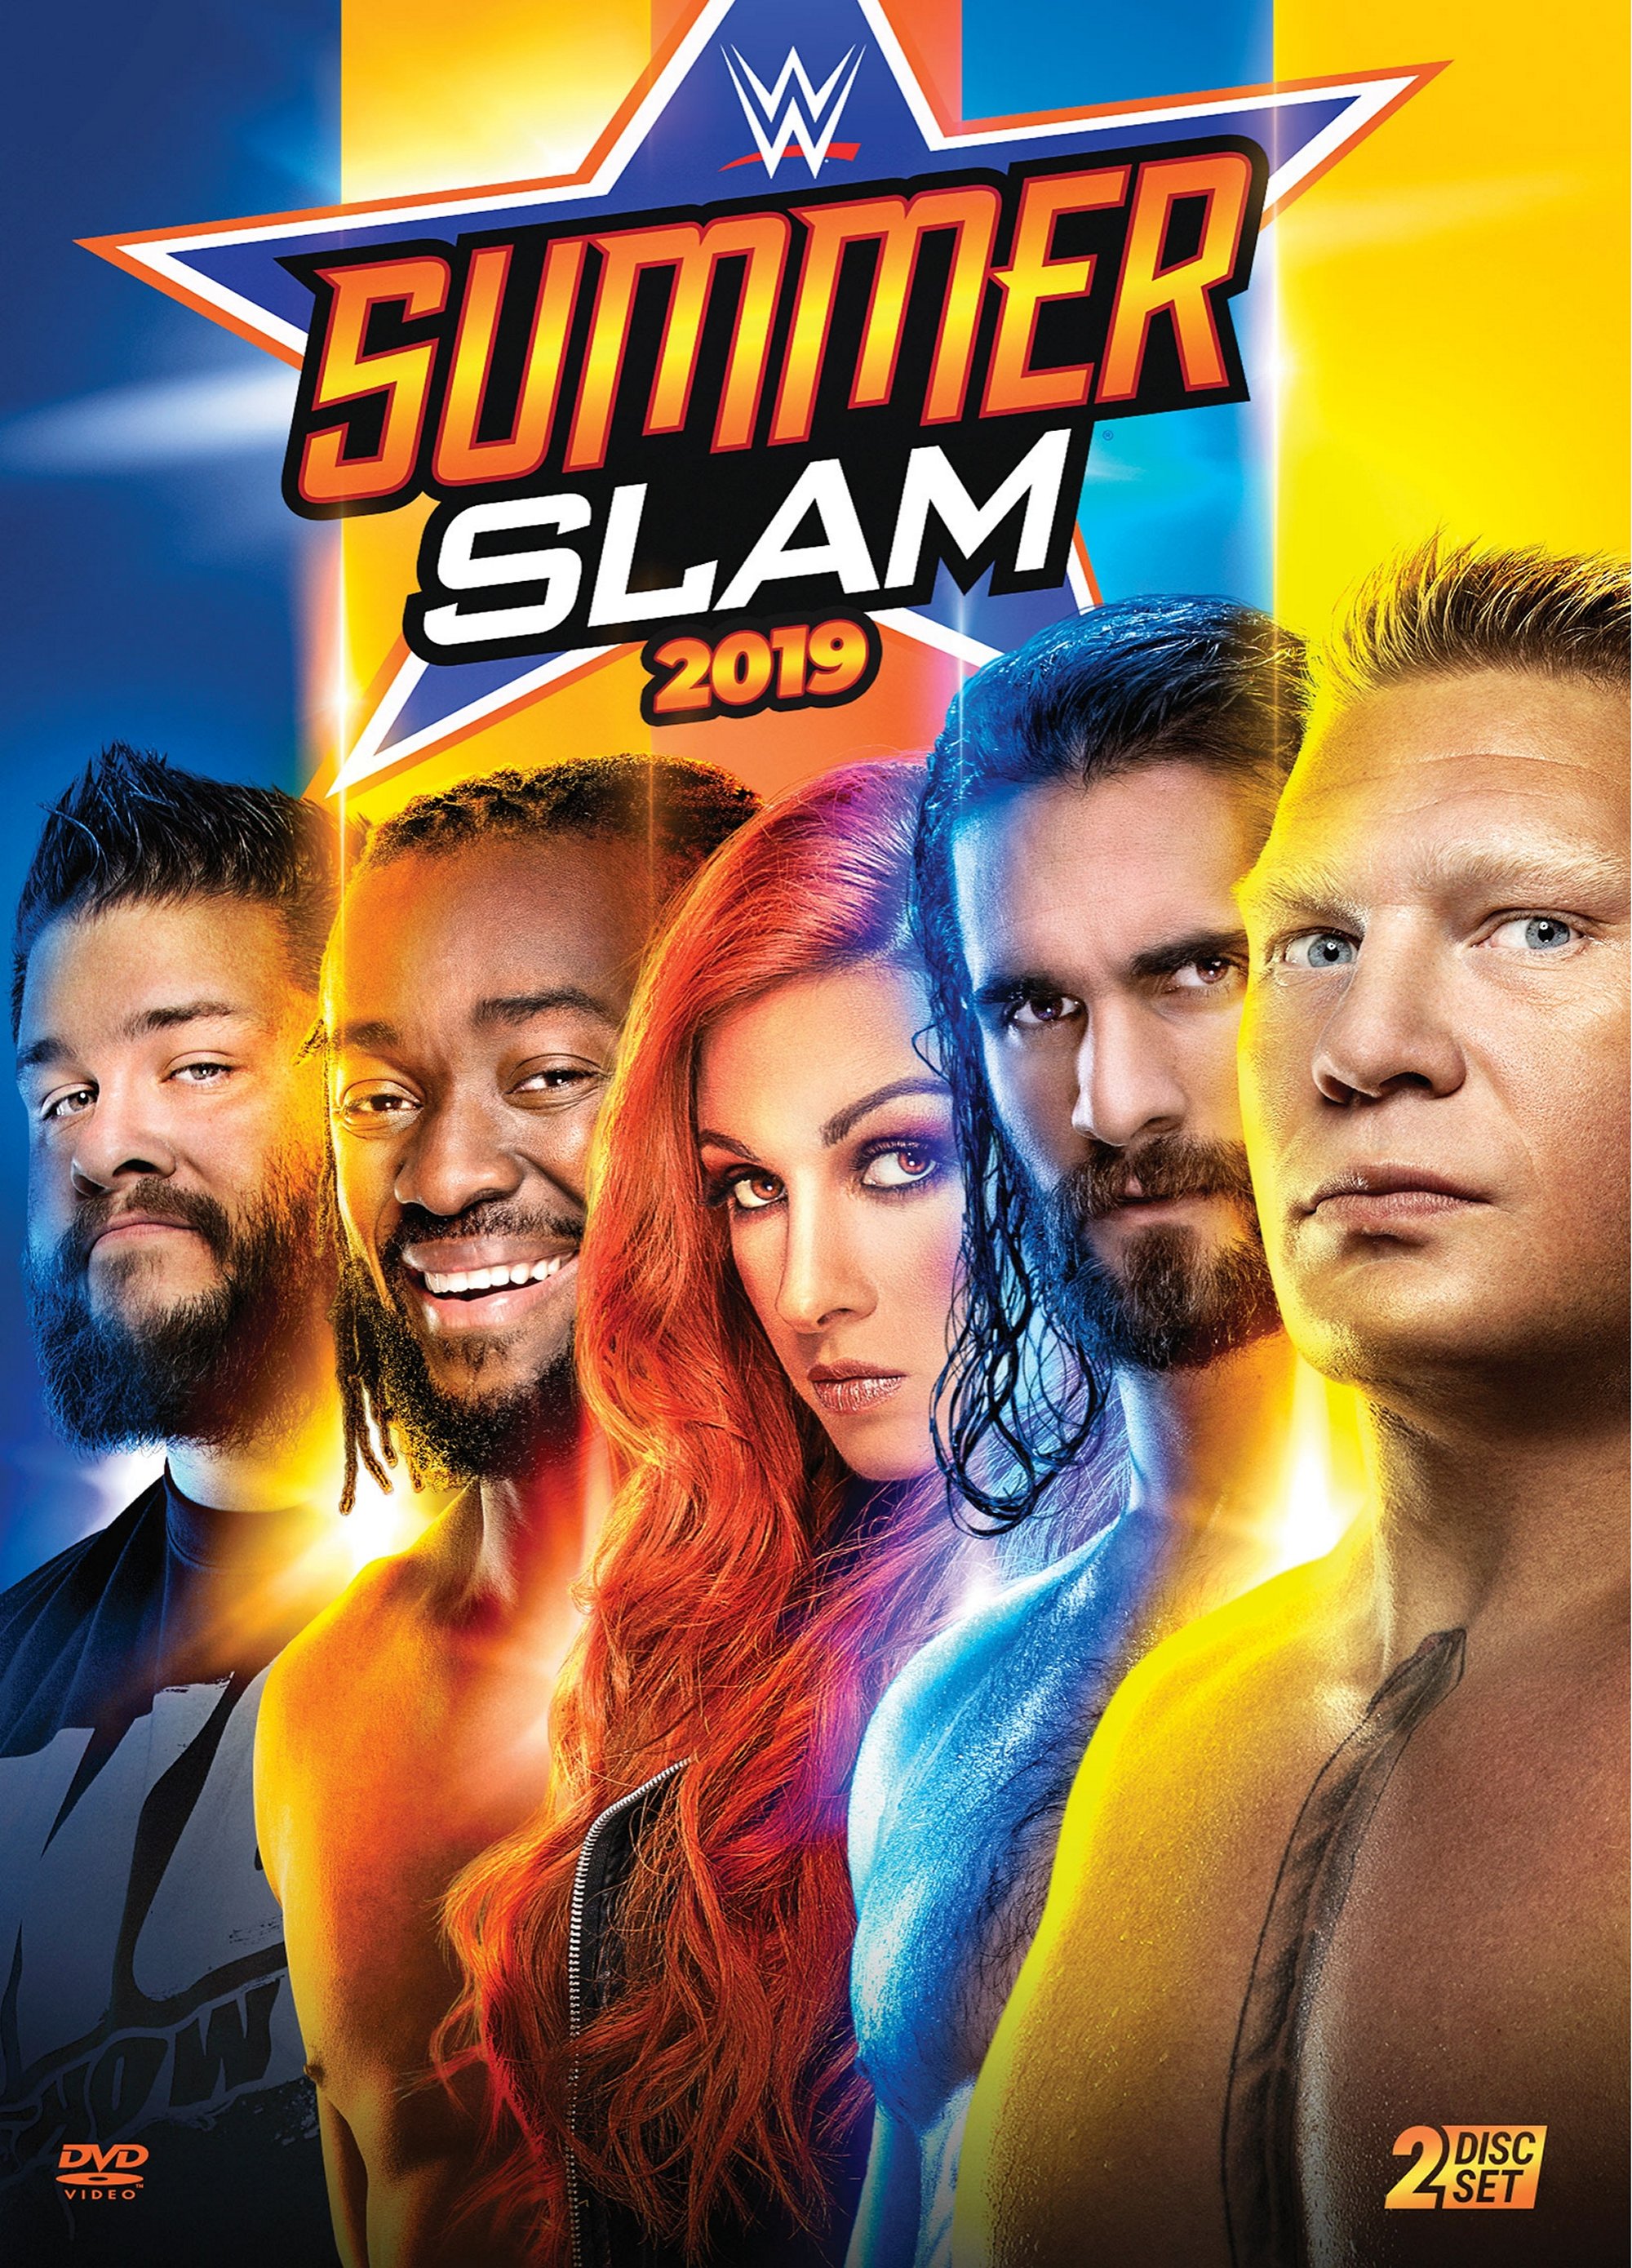 WWE: Summerslam 2019 [2 Discs] [DVD] [2019]